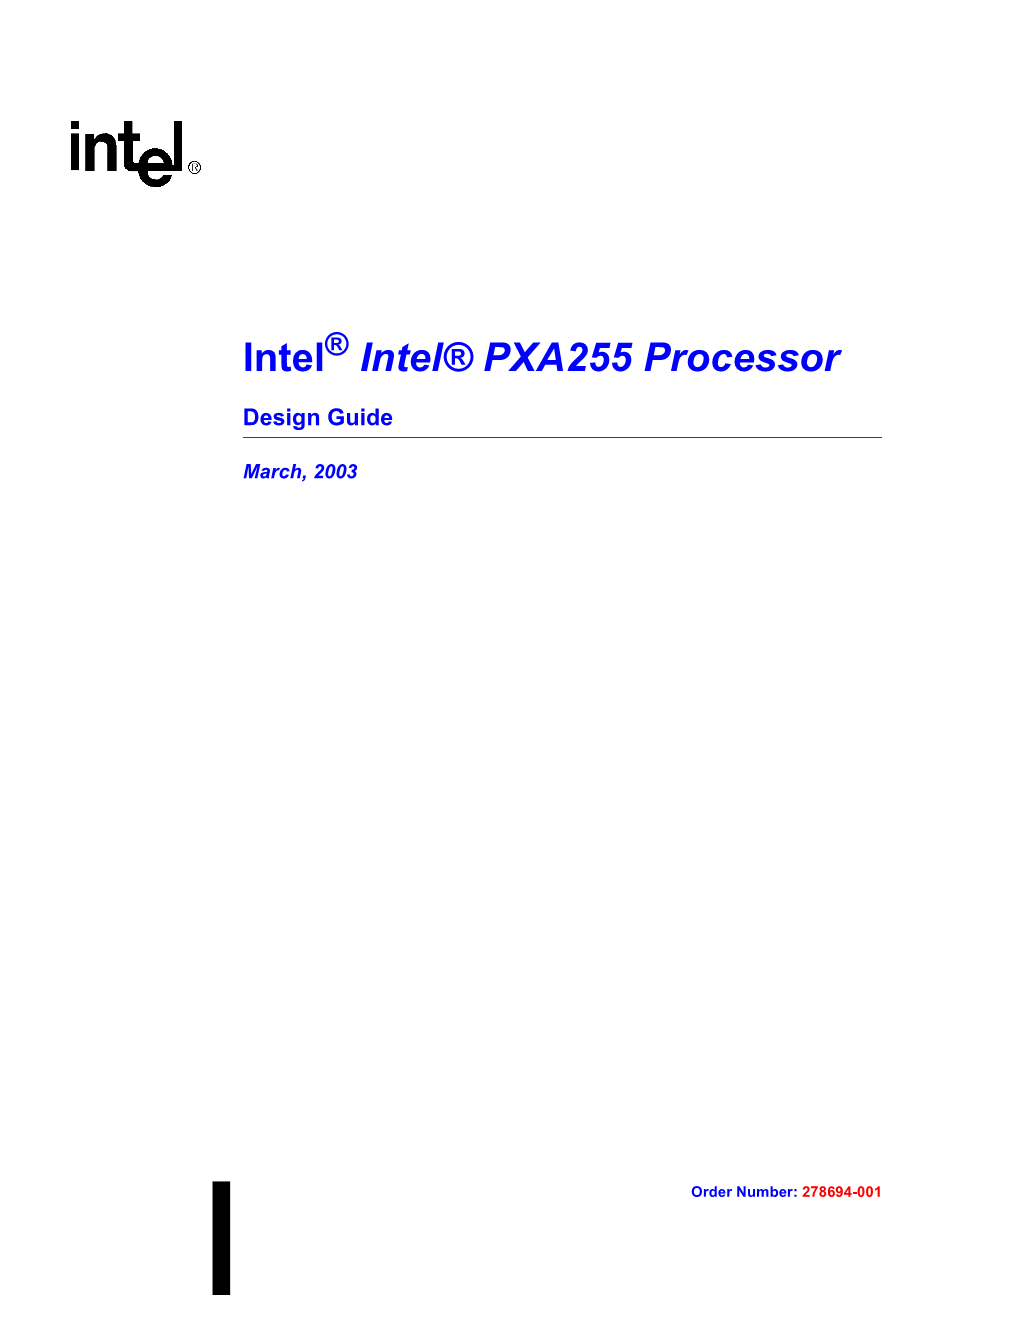 Intel Intel® PXA255 Processor